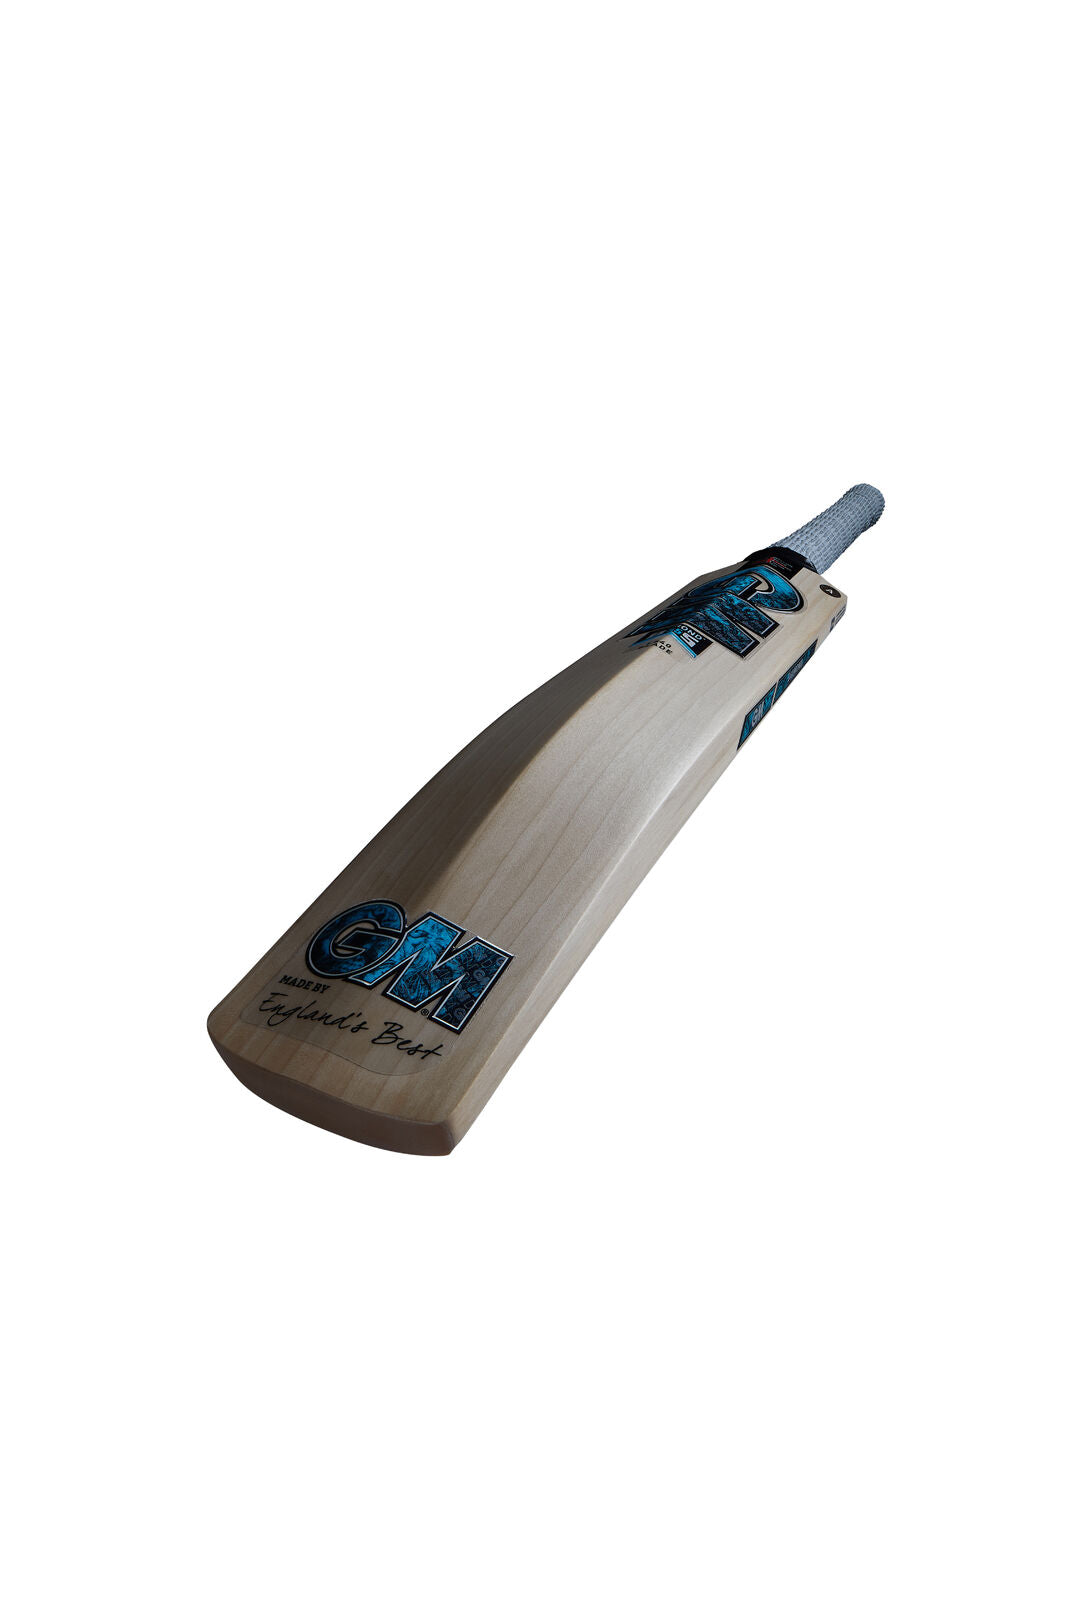 GM Diamond DXM 606 English Willow Cricket Bat - 2024